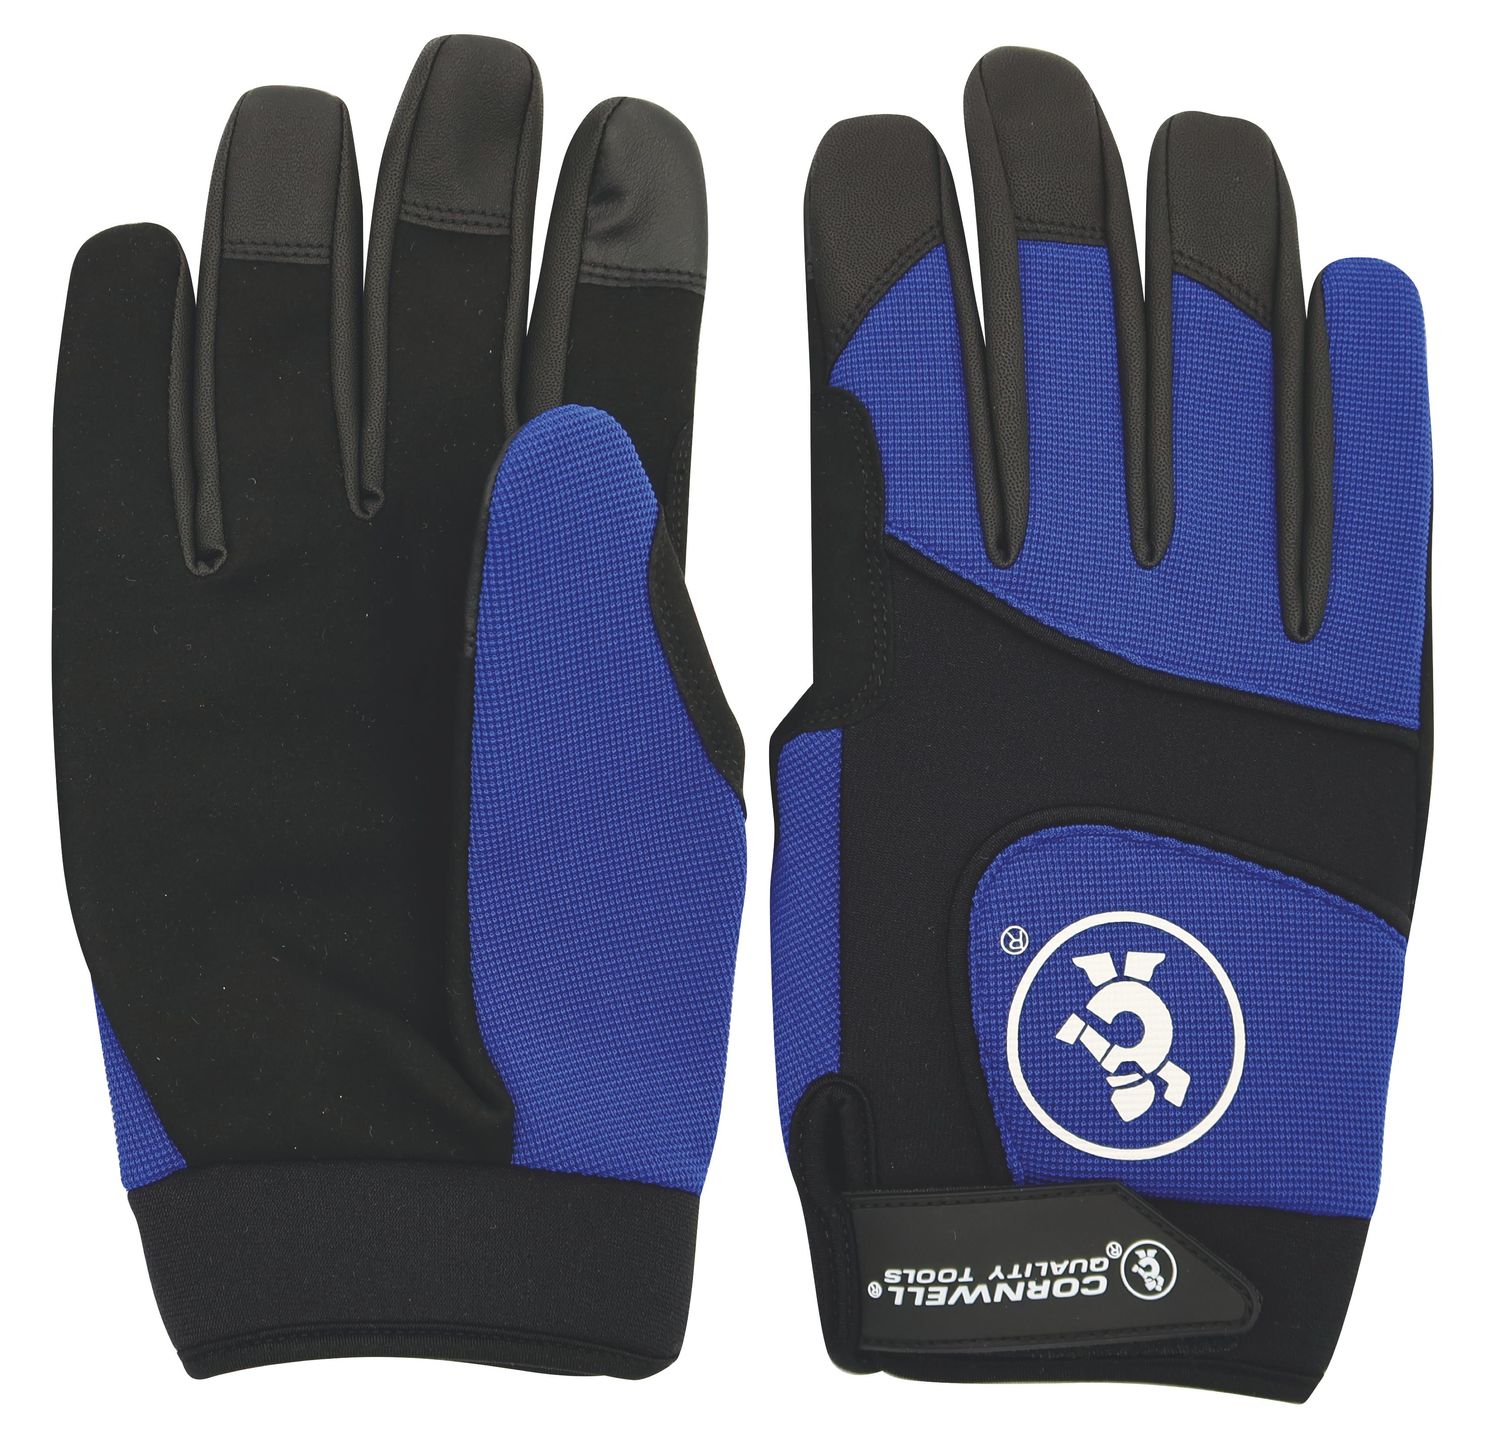 CTGMGBM - Blue Mechanic's Gloves, M